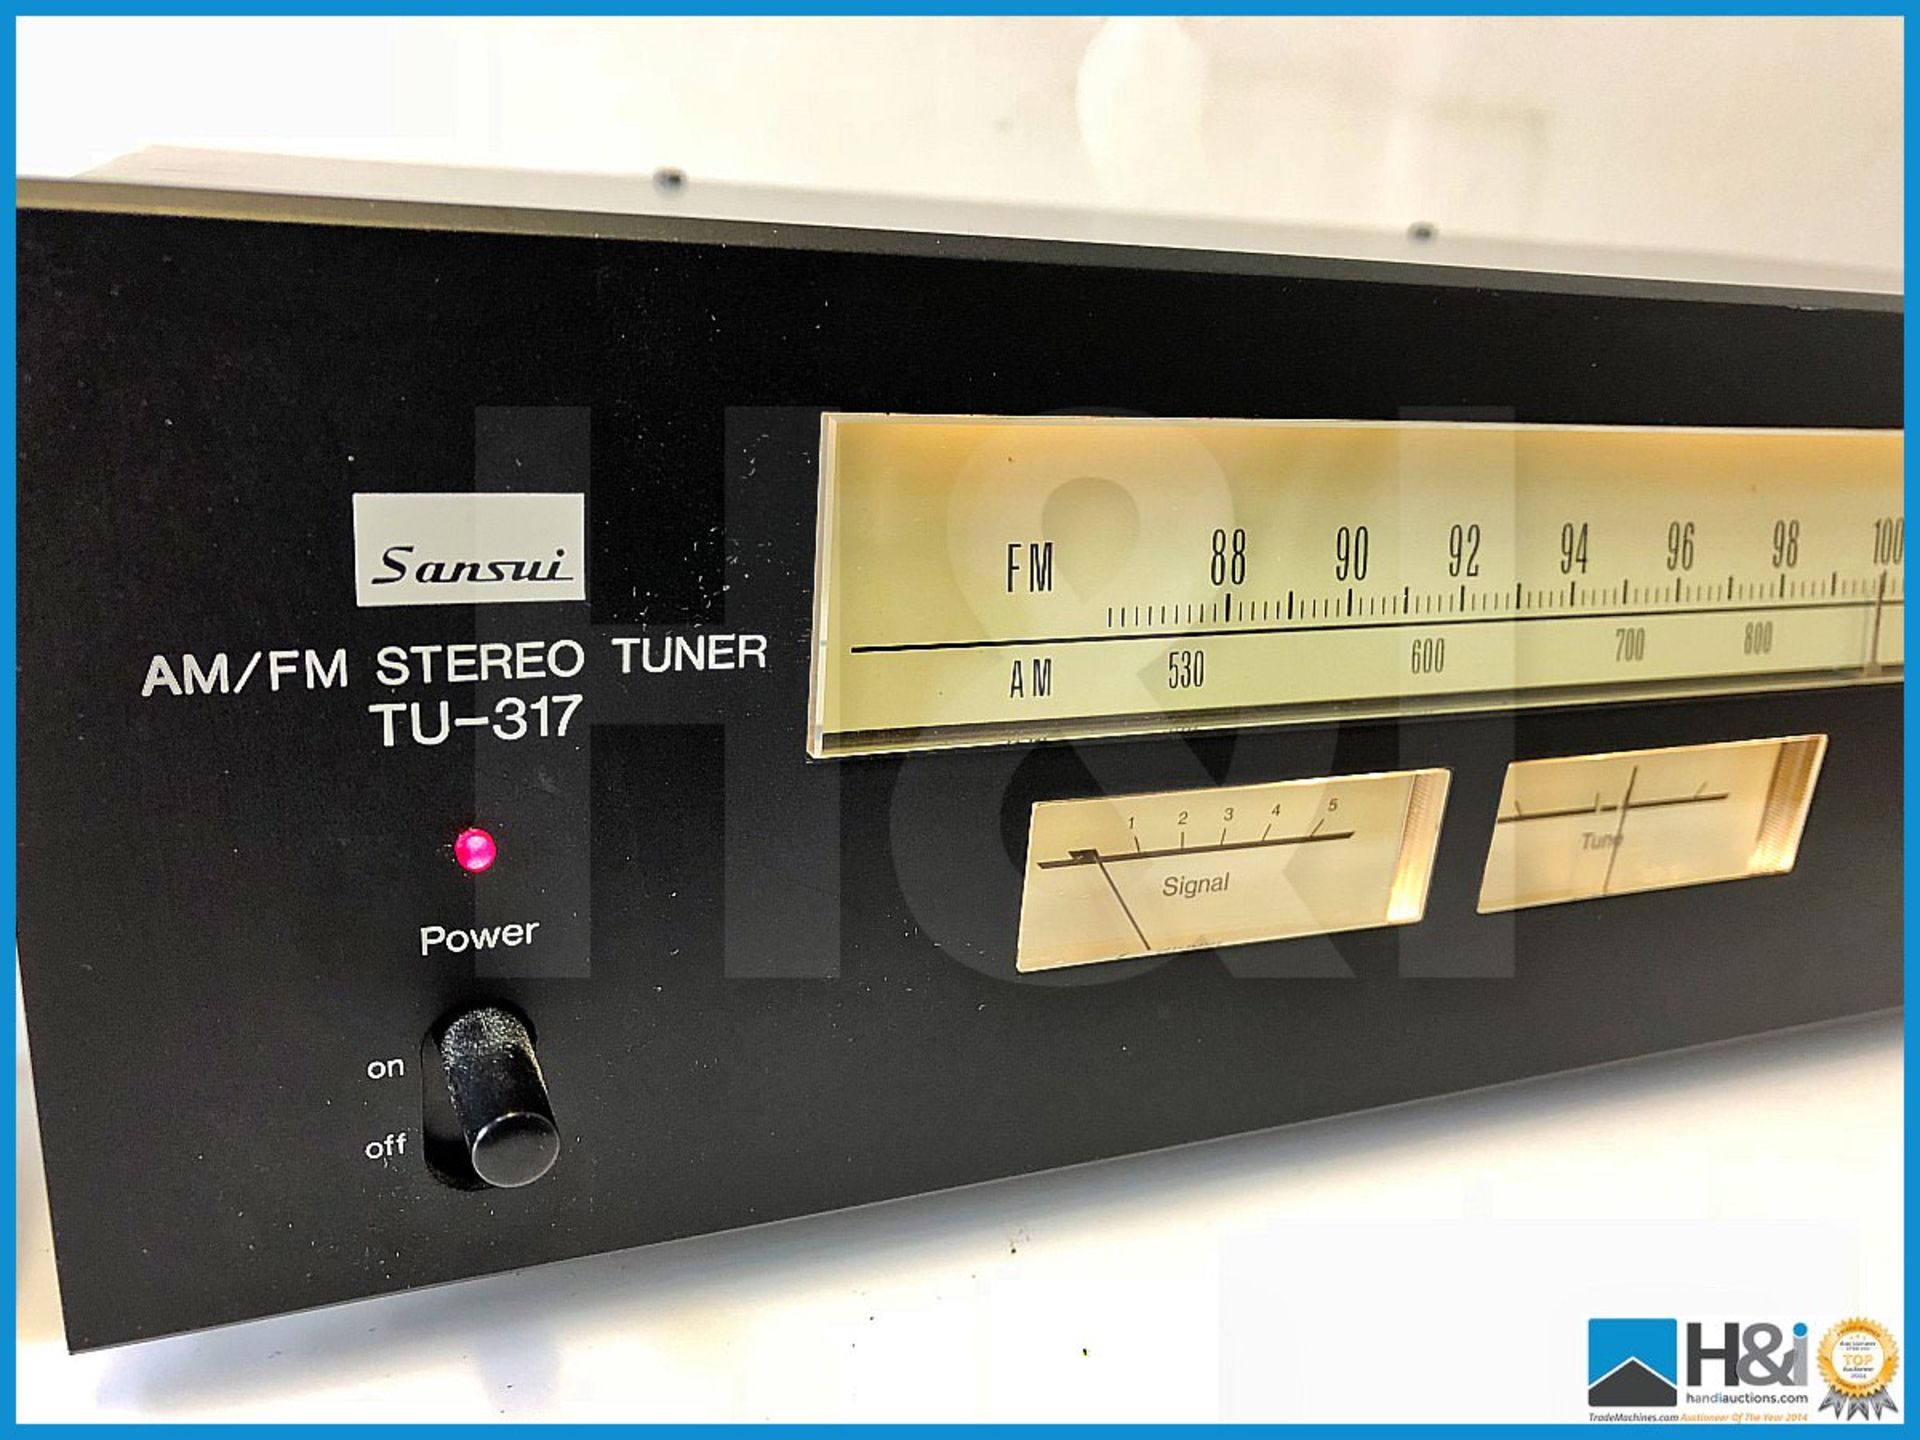 Sansui TU-317 AM-FM Stereo Tuner superb condition - Image 2 of 6